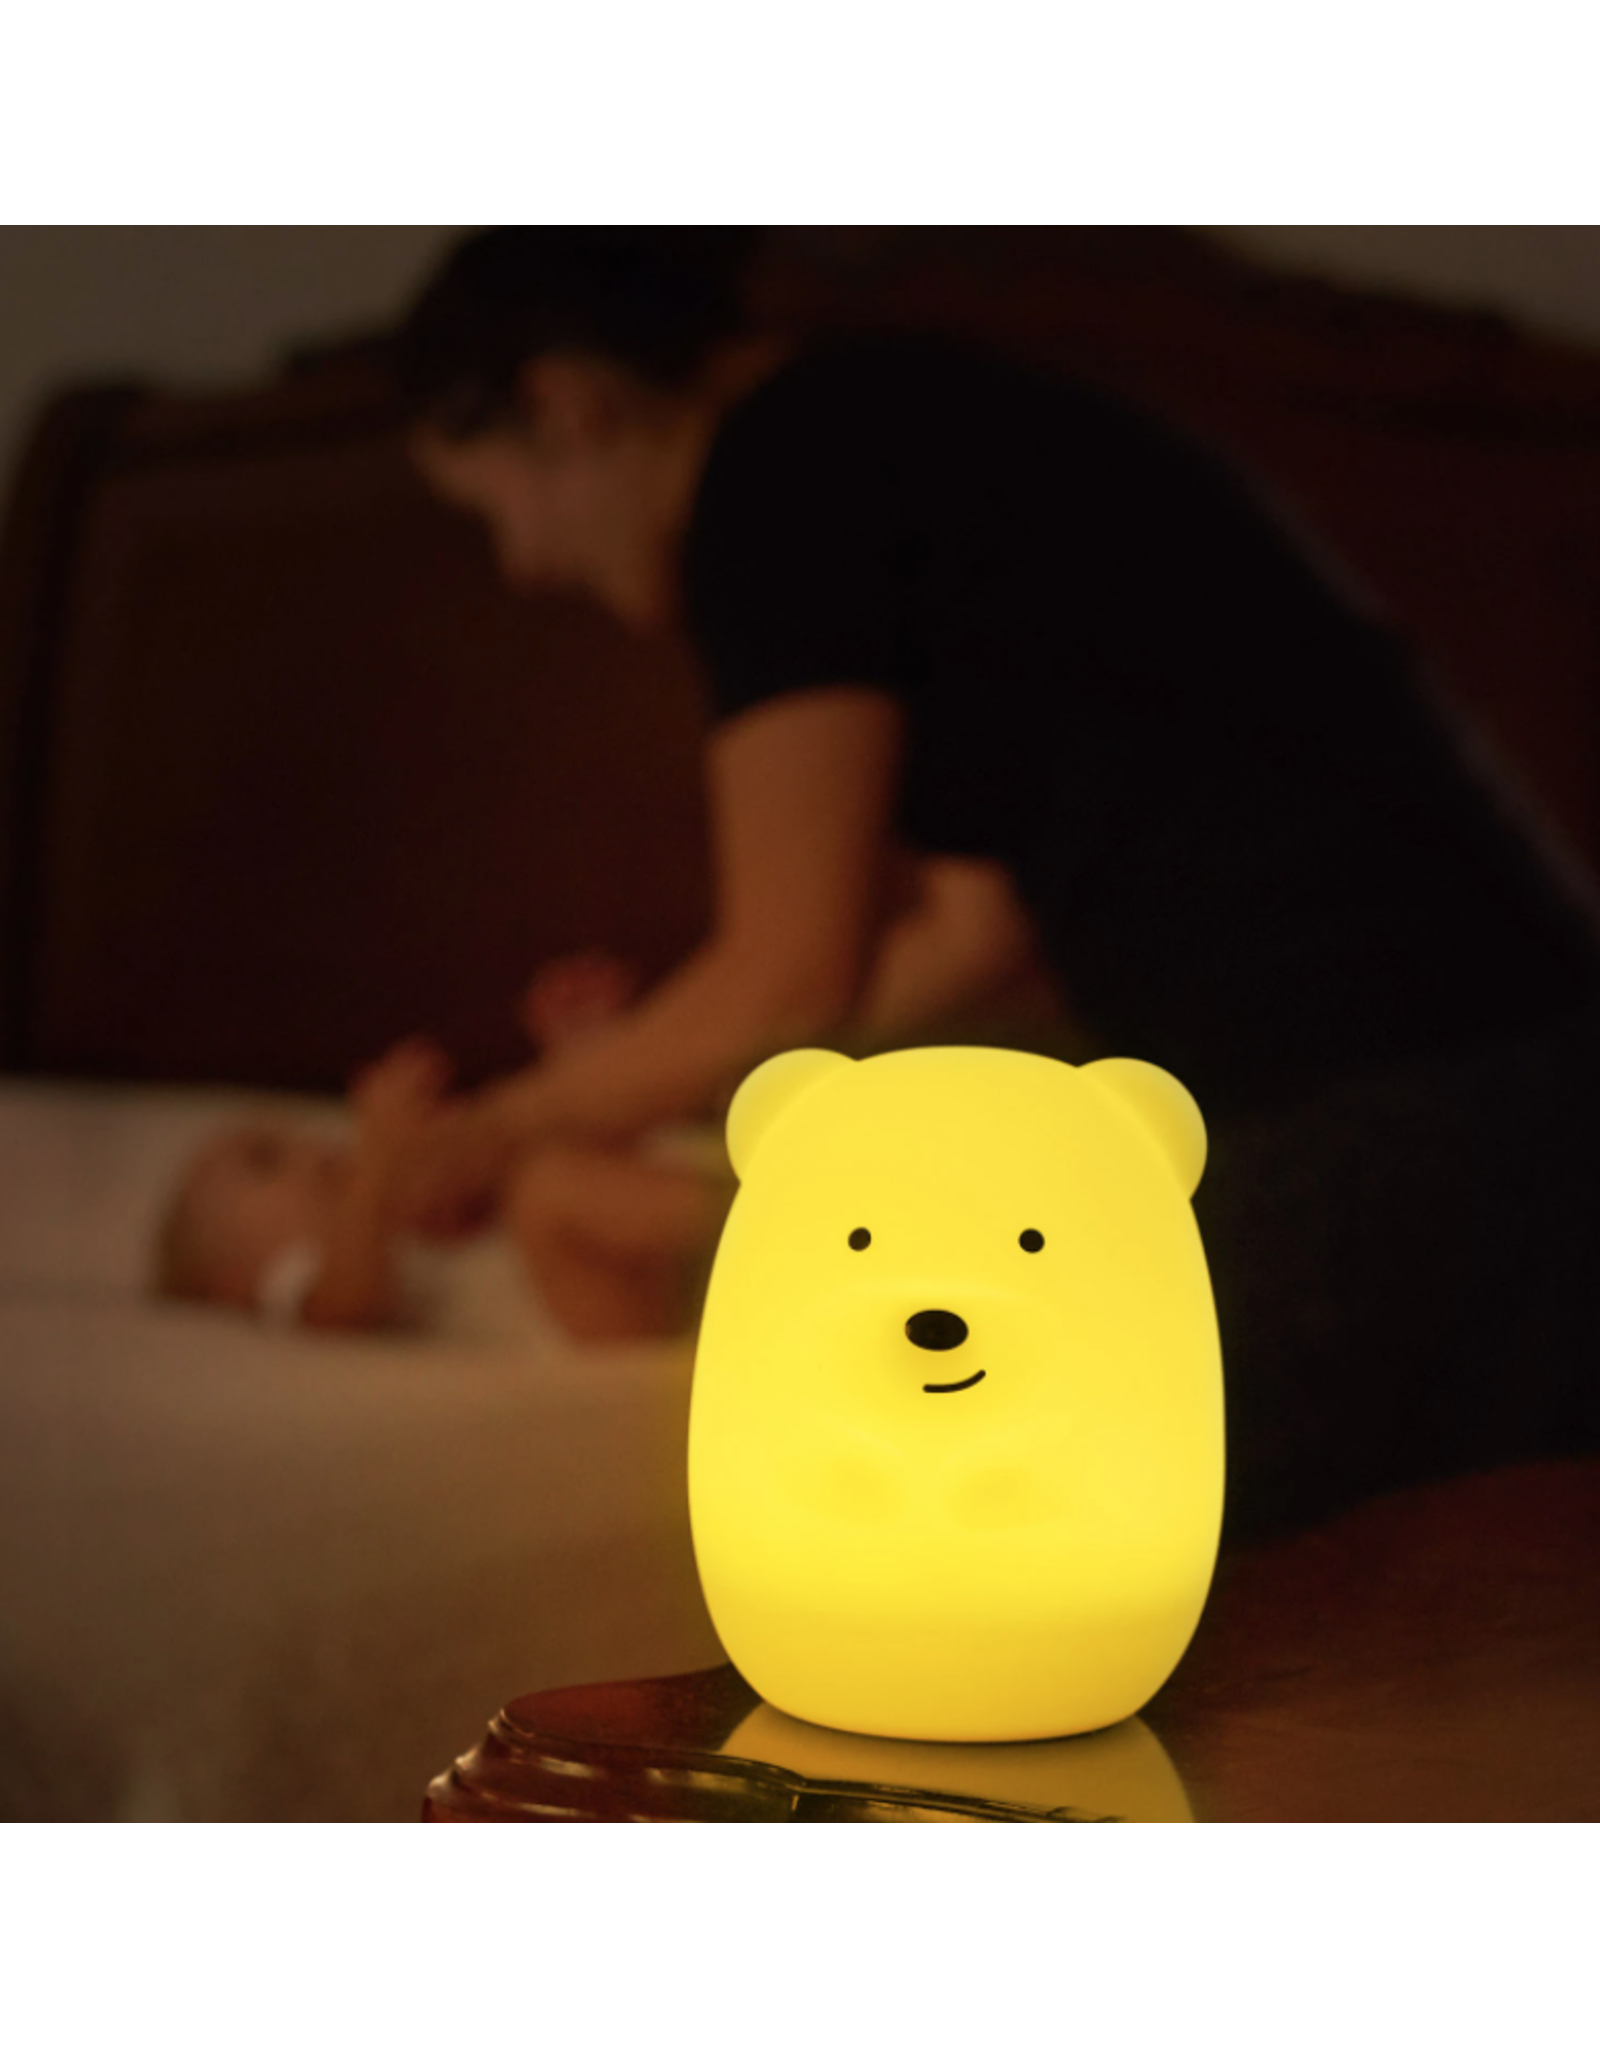 Lumieworld Lumipets, LED Bear Night Light with Remote